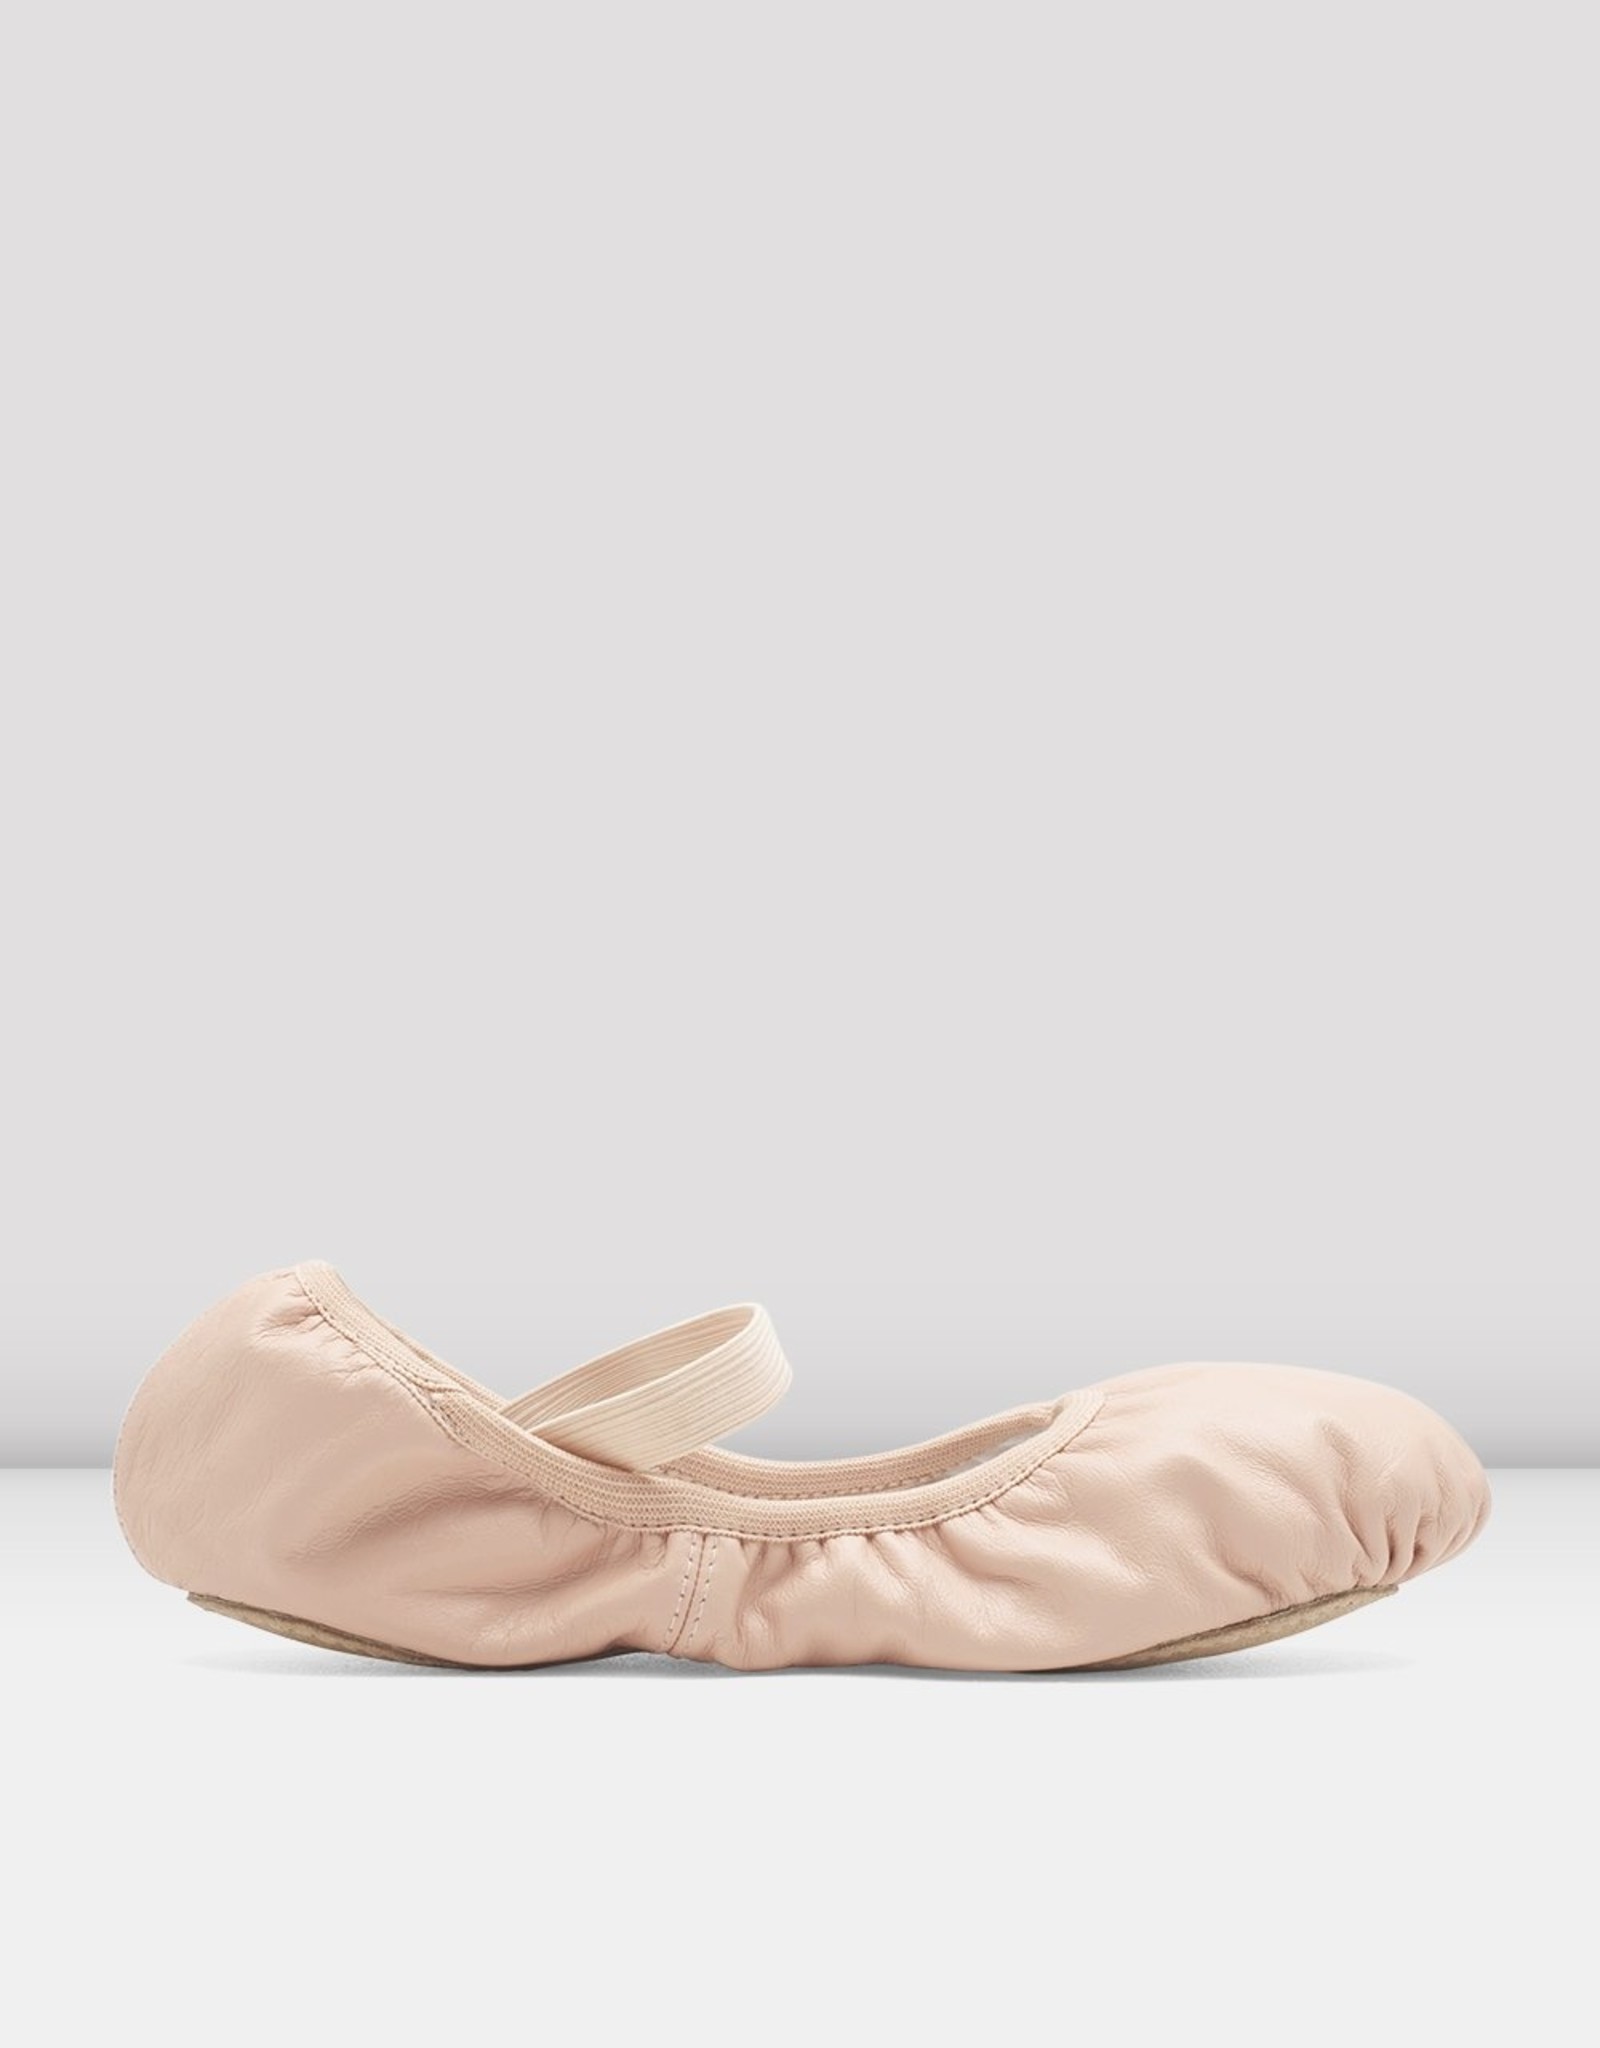 Bloch Children's S0249G Giselle Ballet Shoes